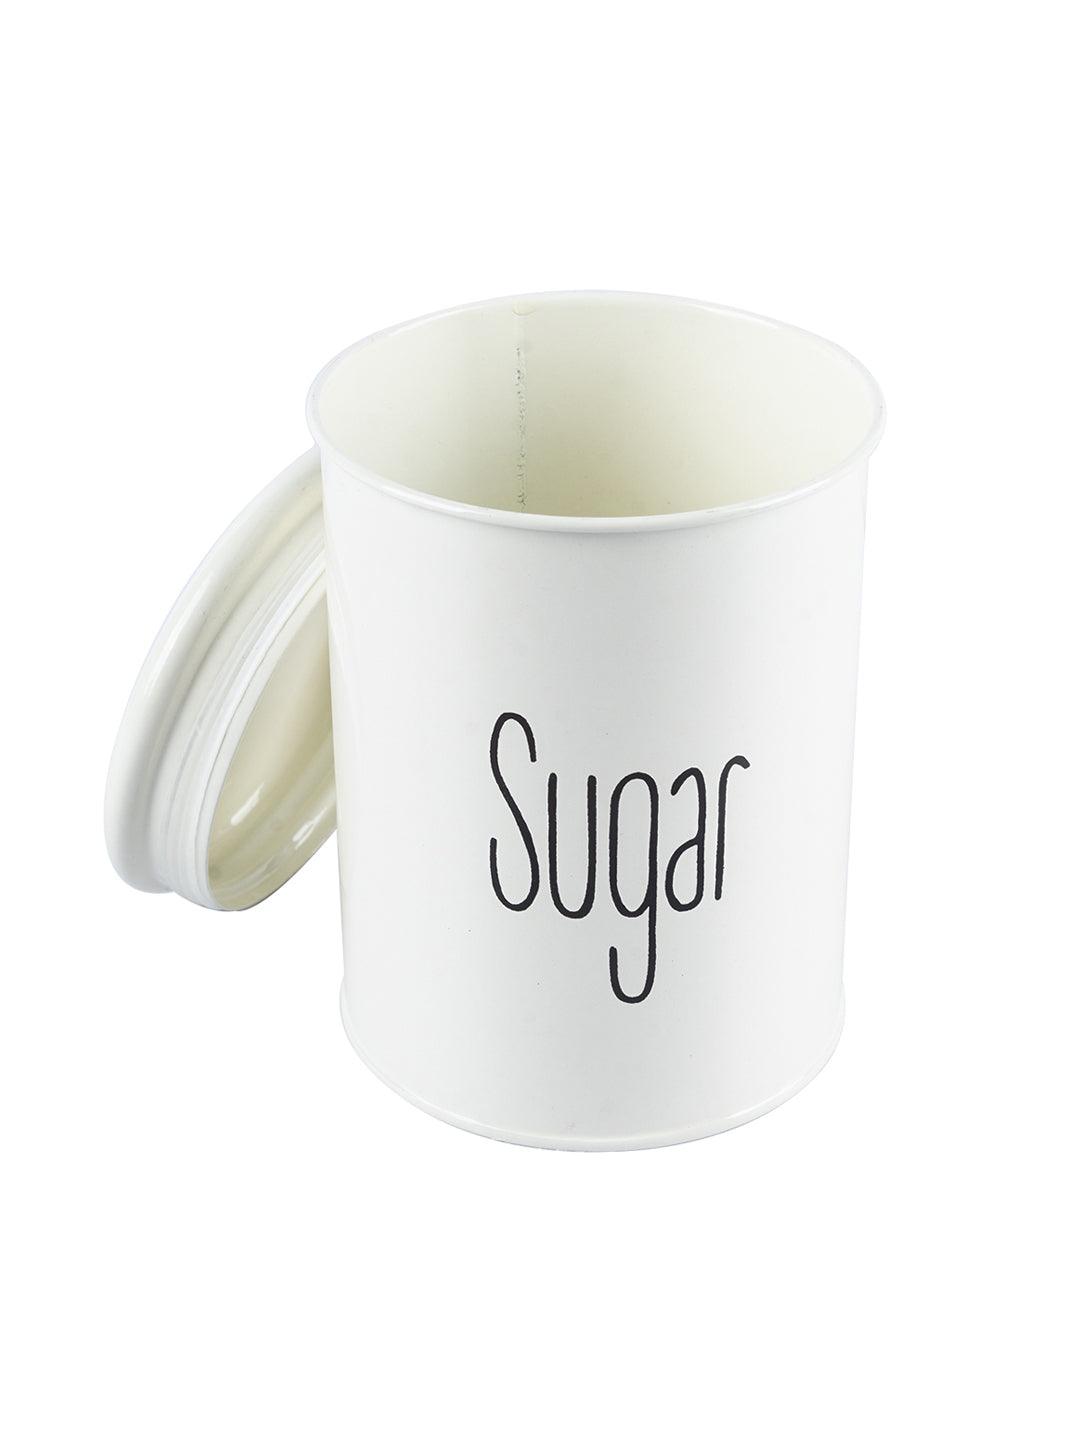 VON CASA Tea & Sugar Jar Set Of 2 (Each 900 Ml) | Airtight Jars | Metal Storage Container